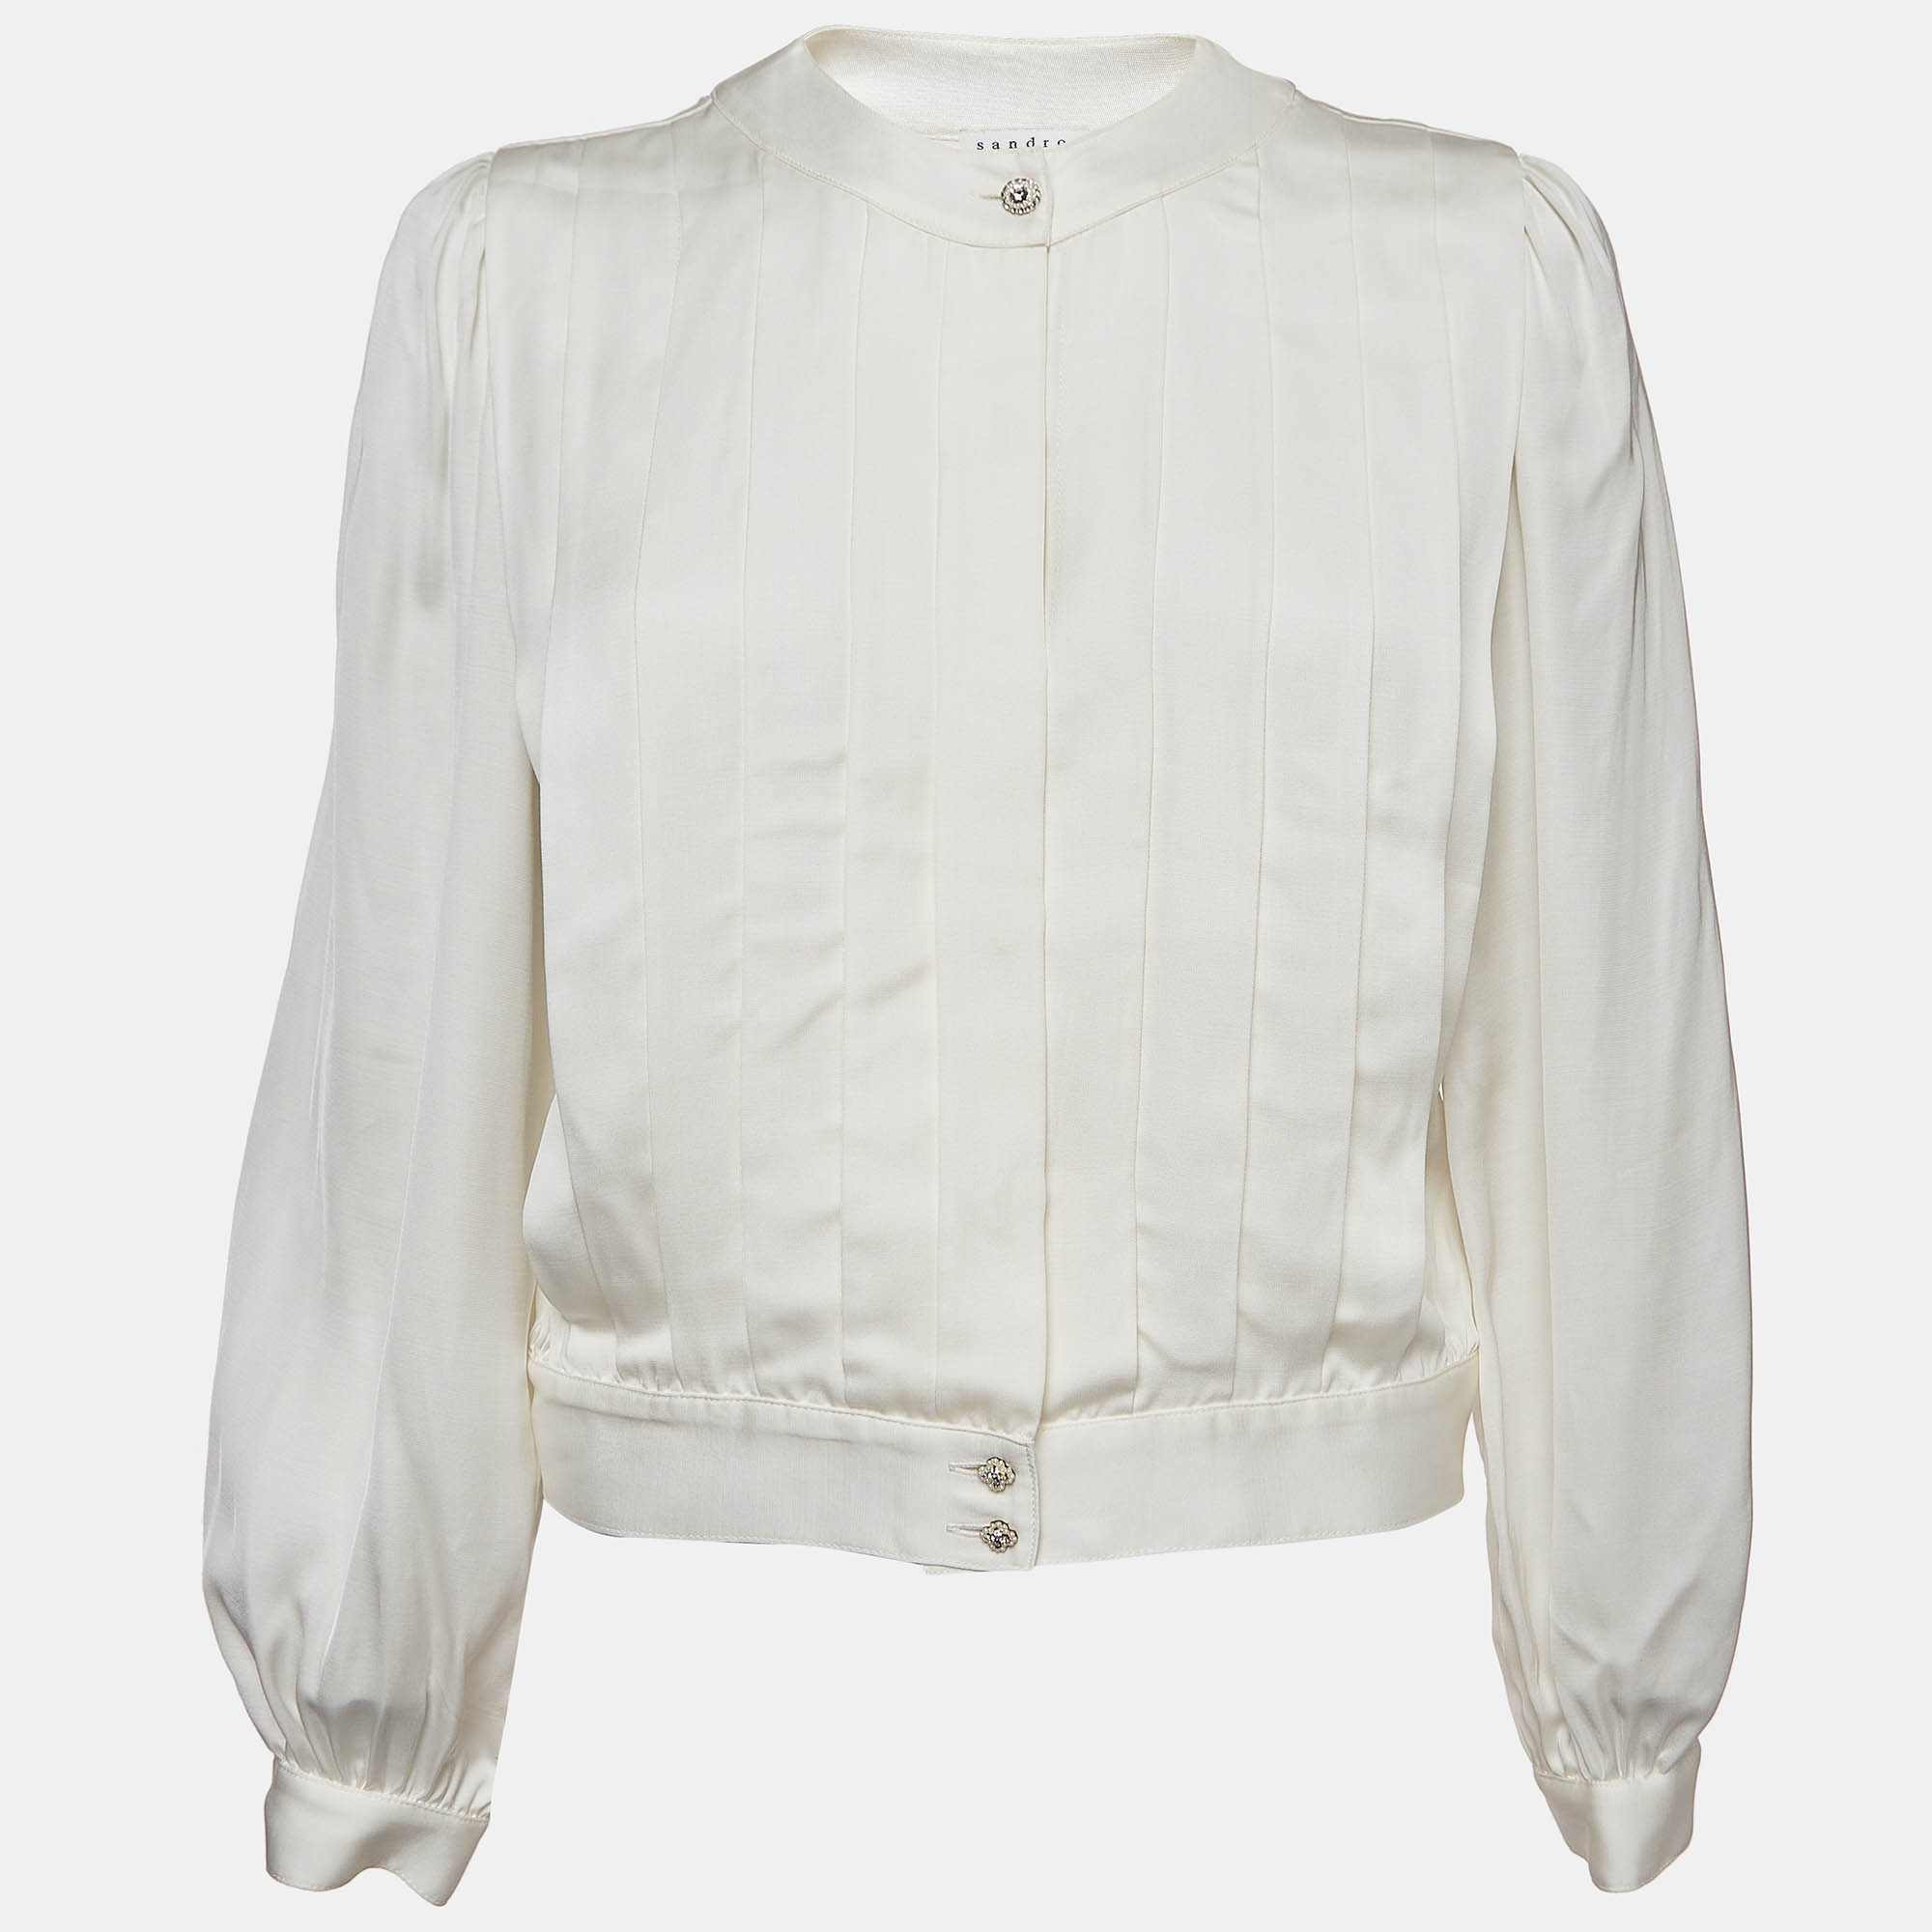 Sandro off-white satin pleated blouse s